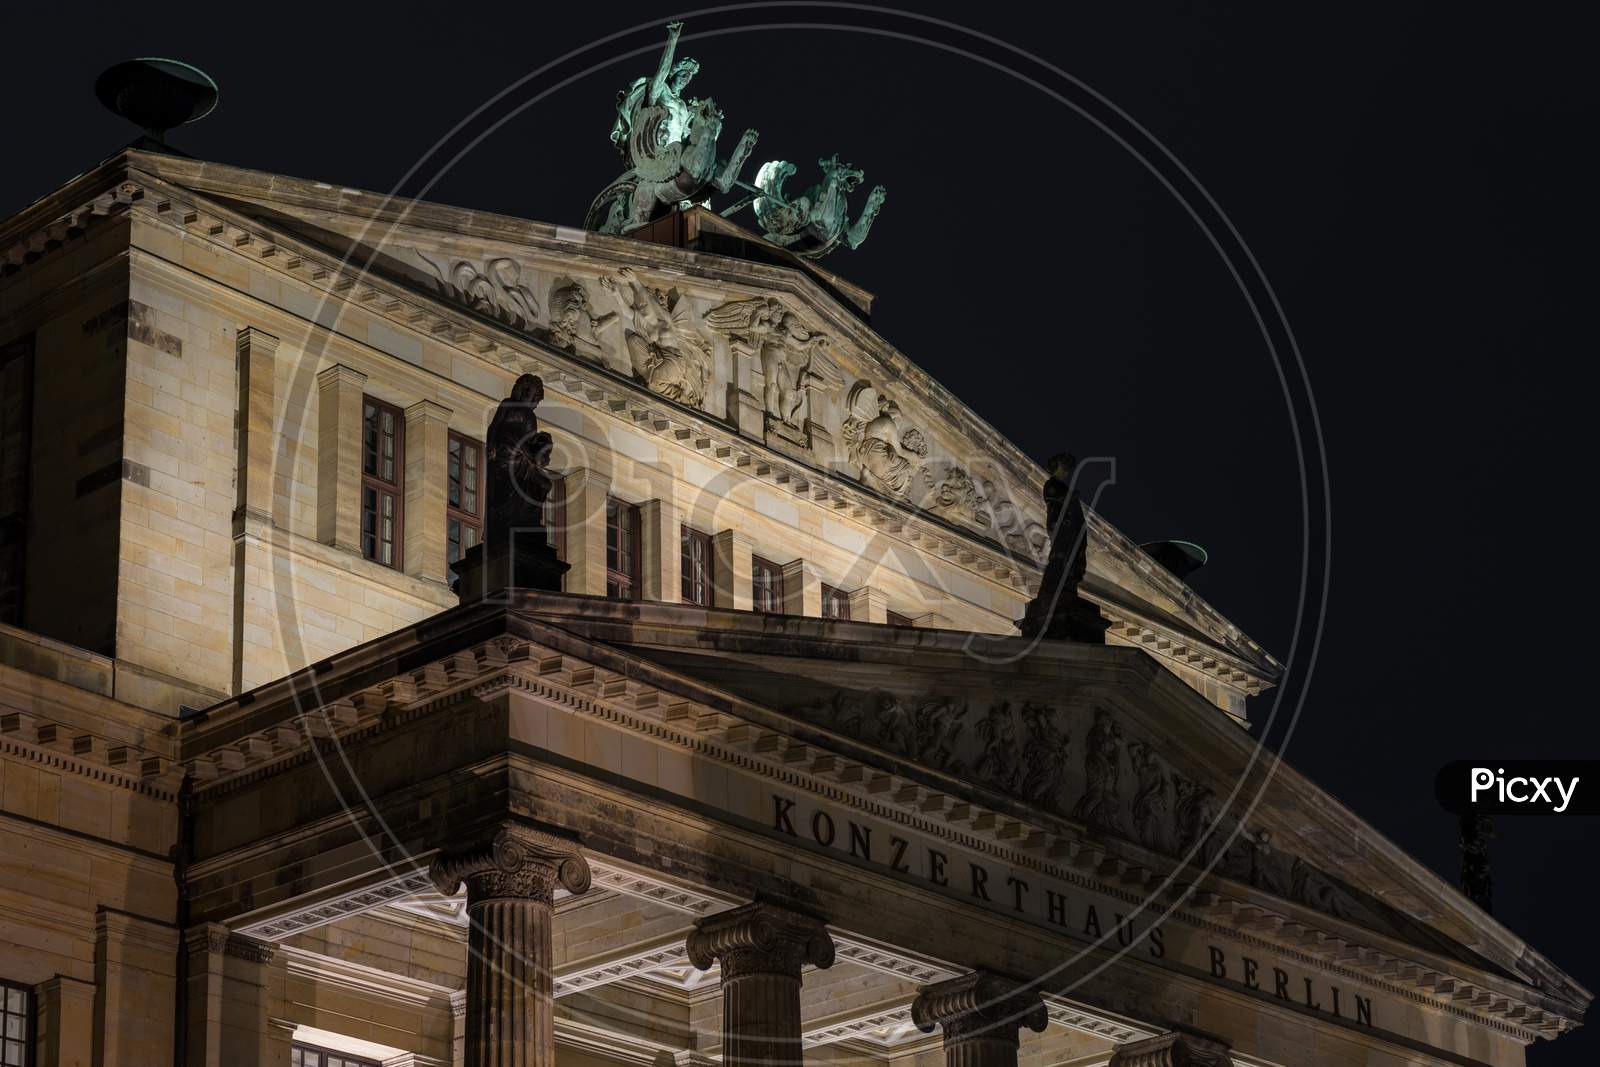 Konzerthaus Berlin Concert Hall In The Gendarmenmarkt Square In Berlin, Germany